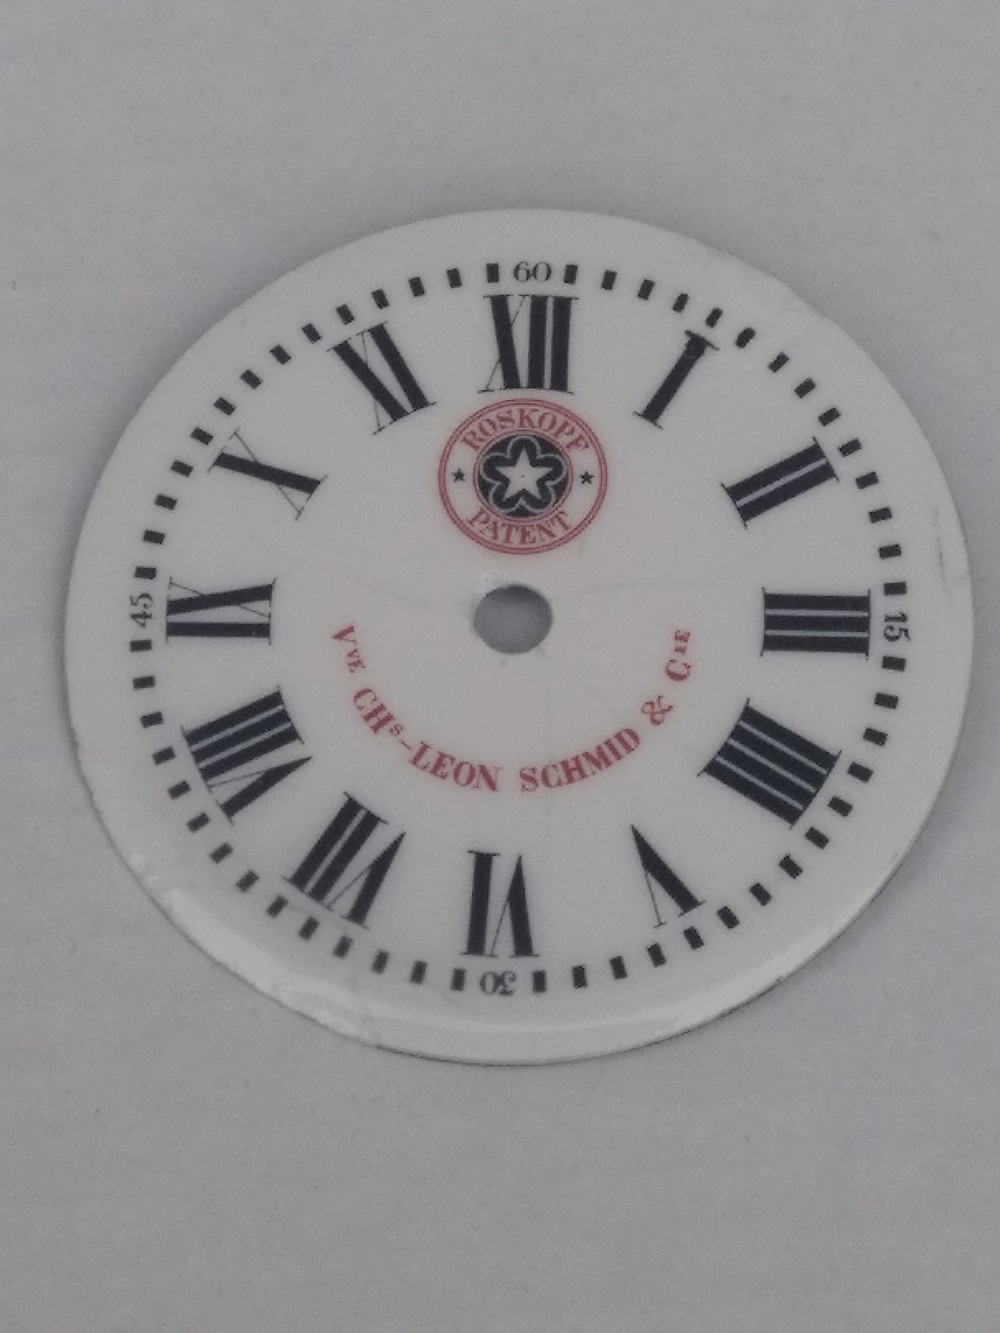 Horlogerie Art-Temps, artisan cadranier